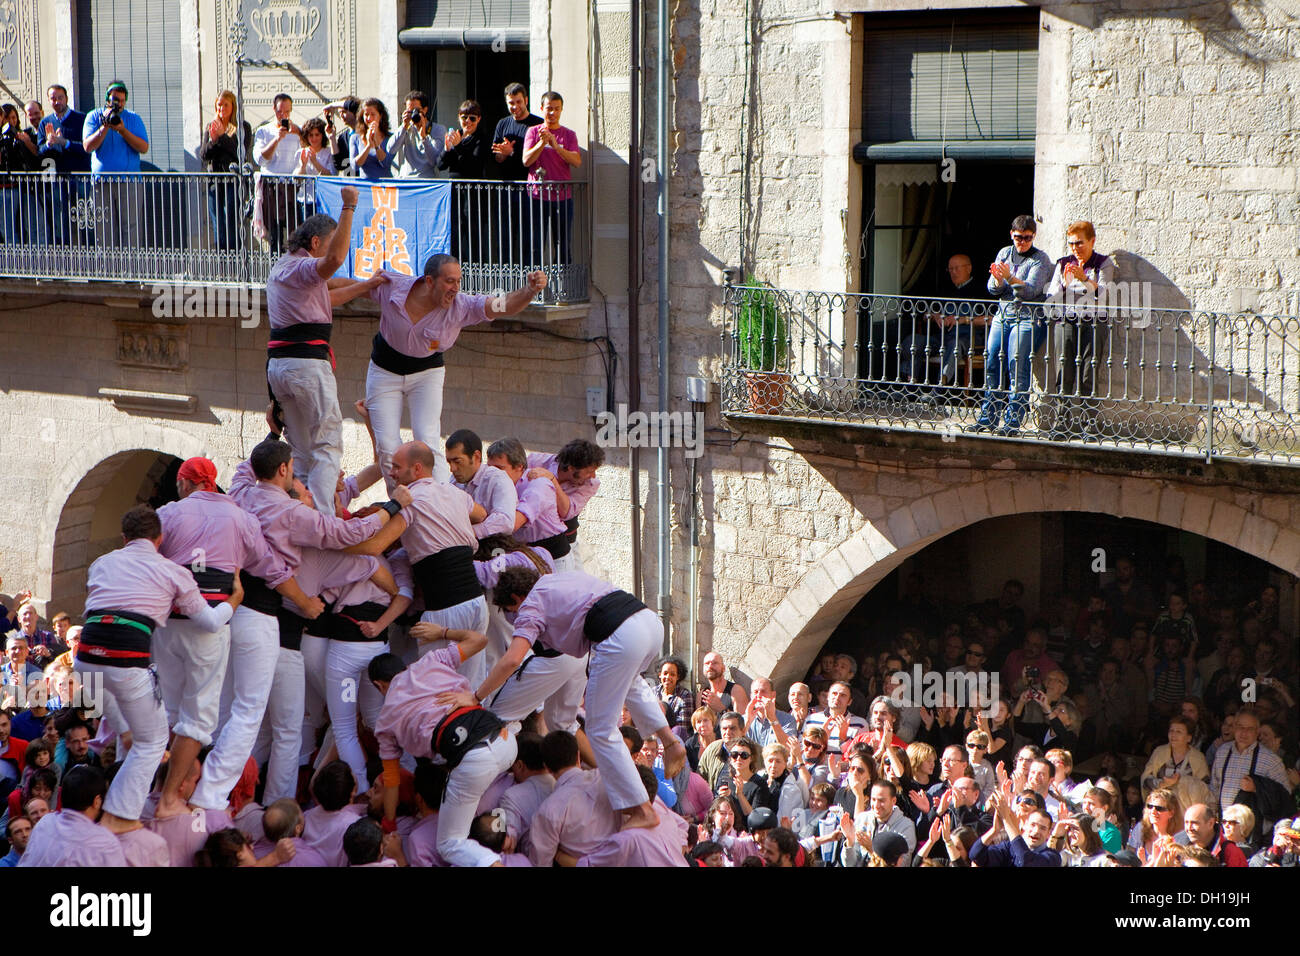 Celebrating a great success.Minyons de Terrassa.'Castellers'.Fires i festes de Sant Narcis.Plaça del Vi.Girona.Spain Stock Photo